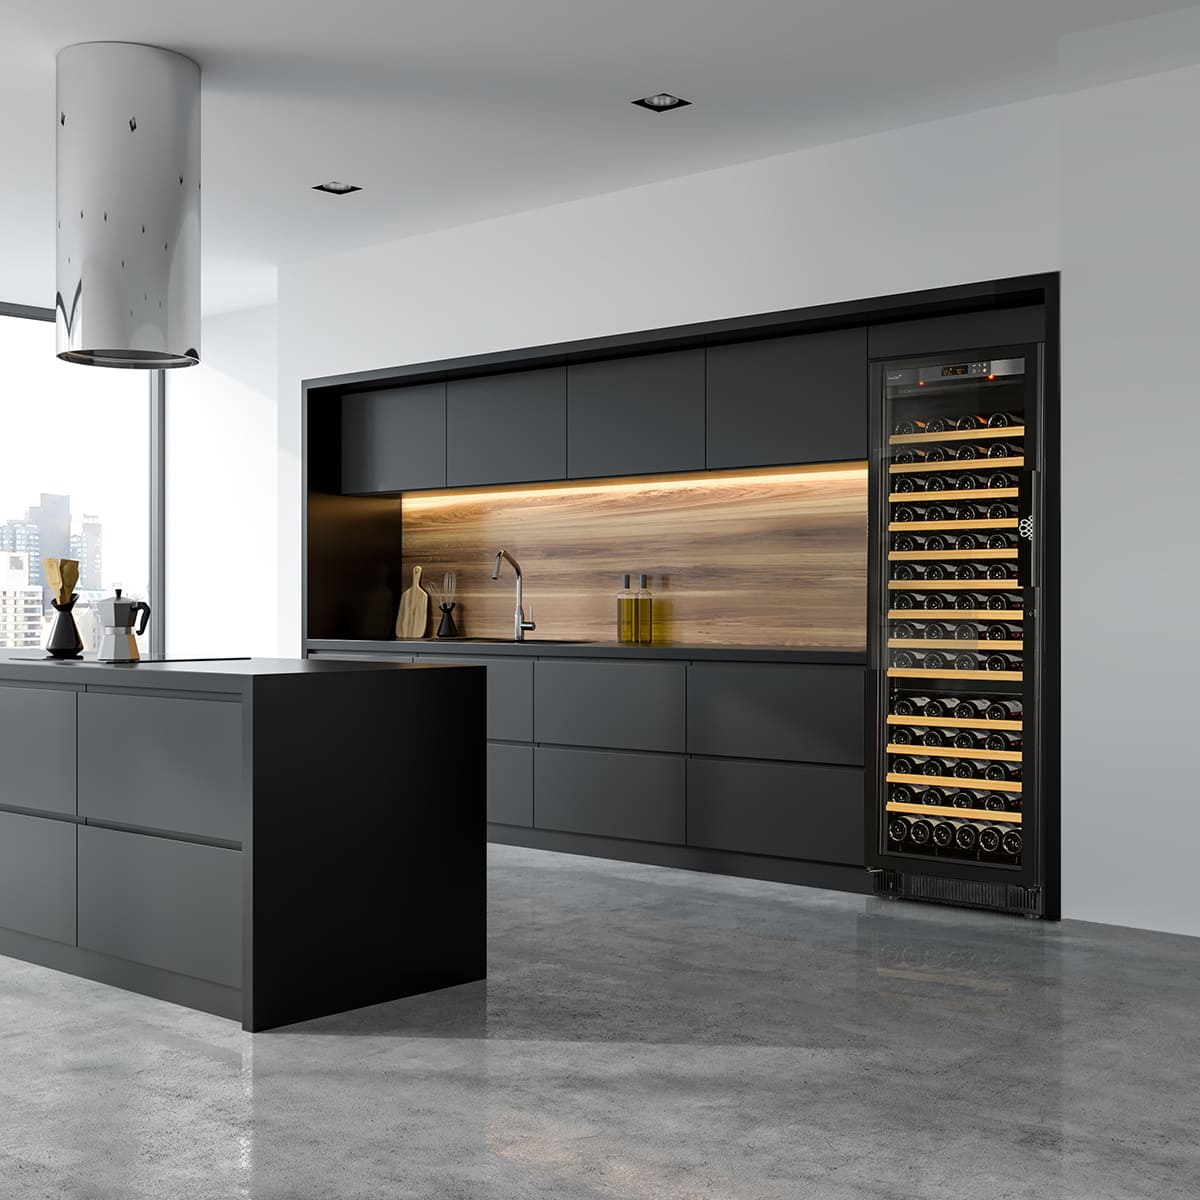 Large wine serving cabinet, multi-temperature - Pure